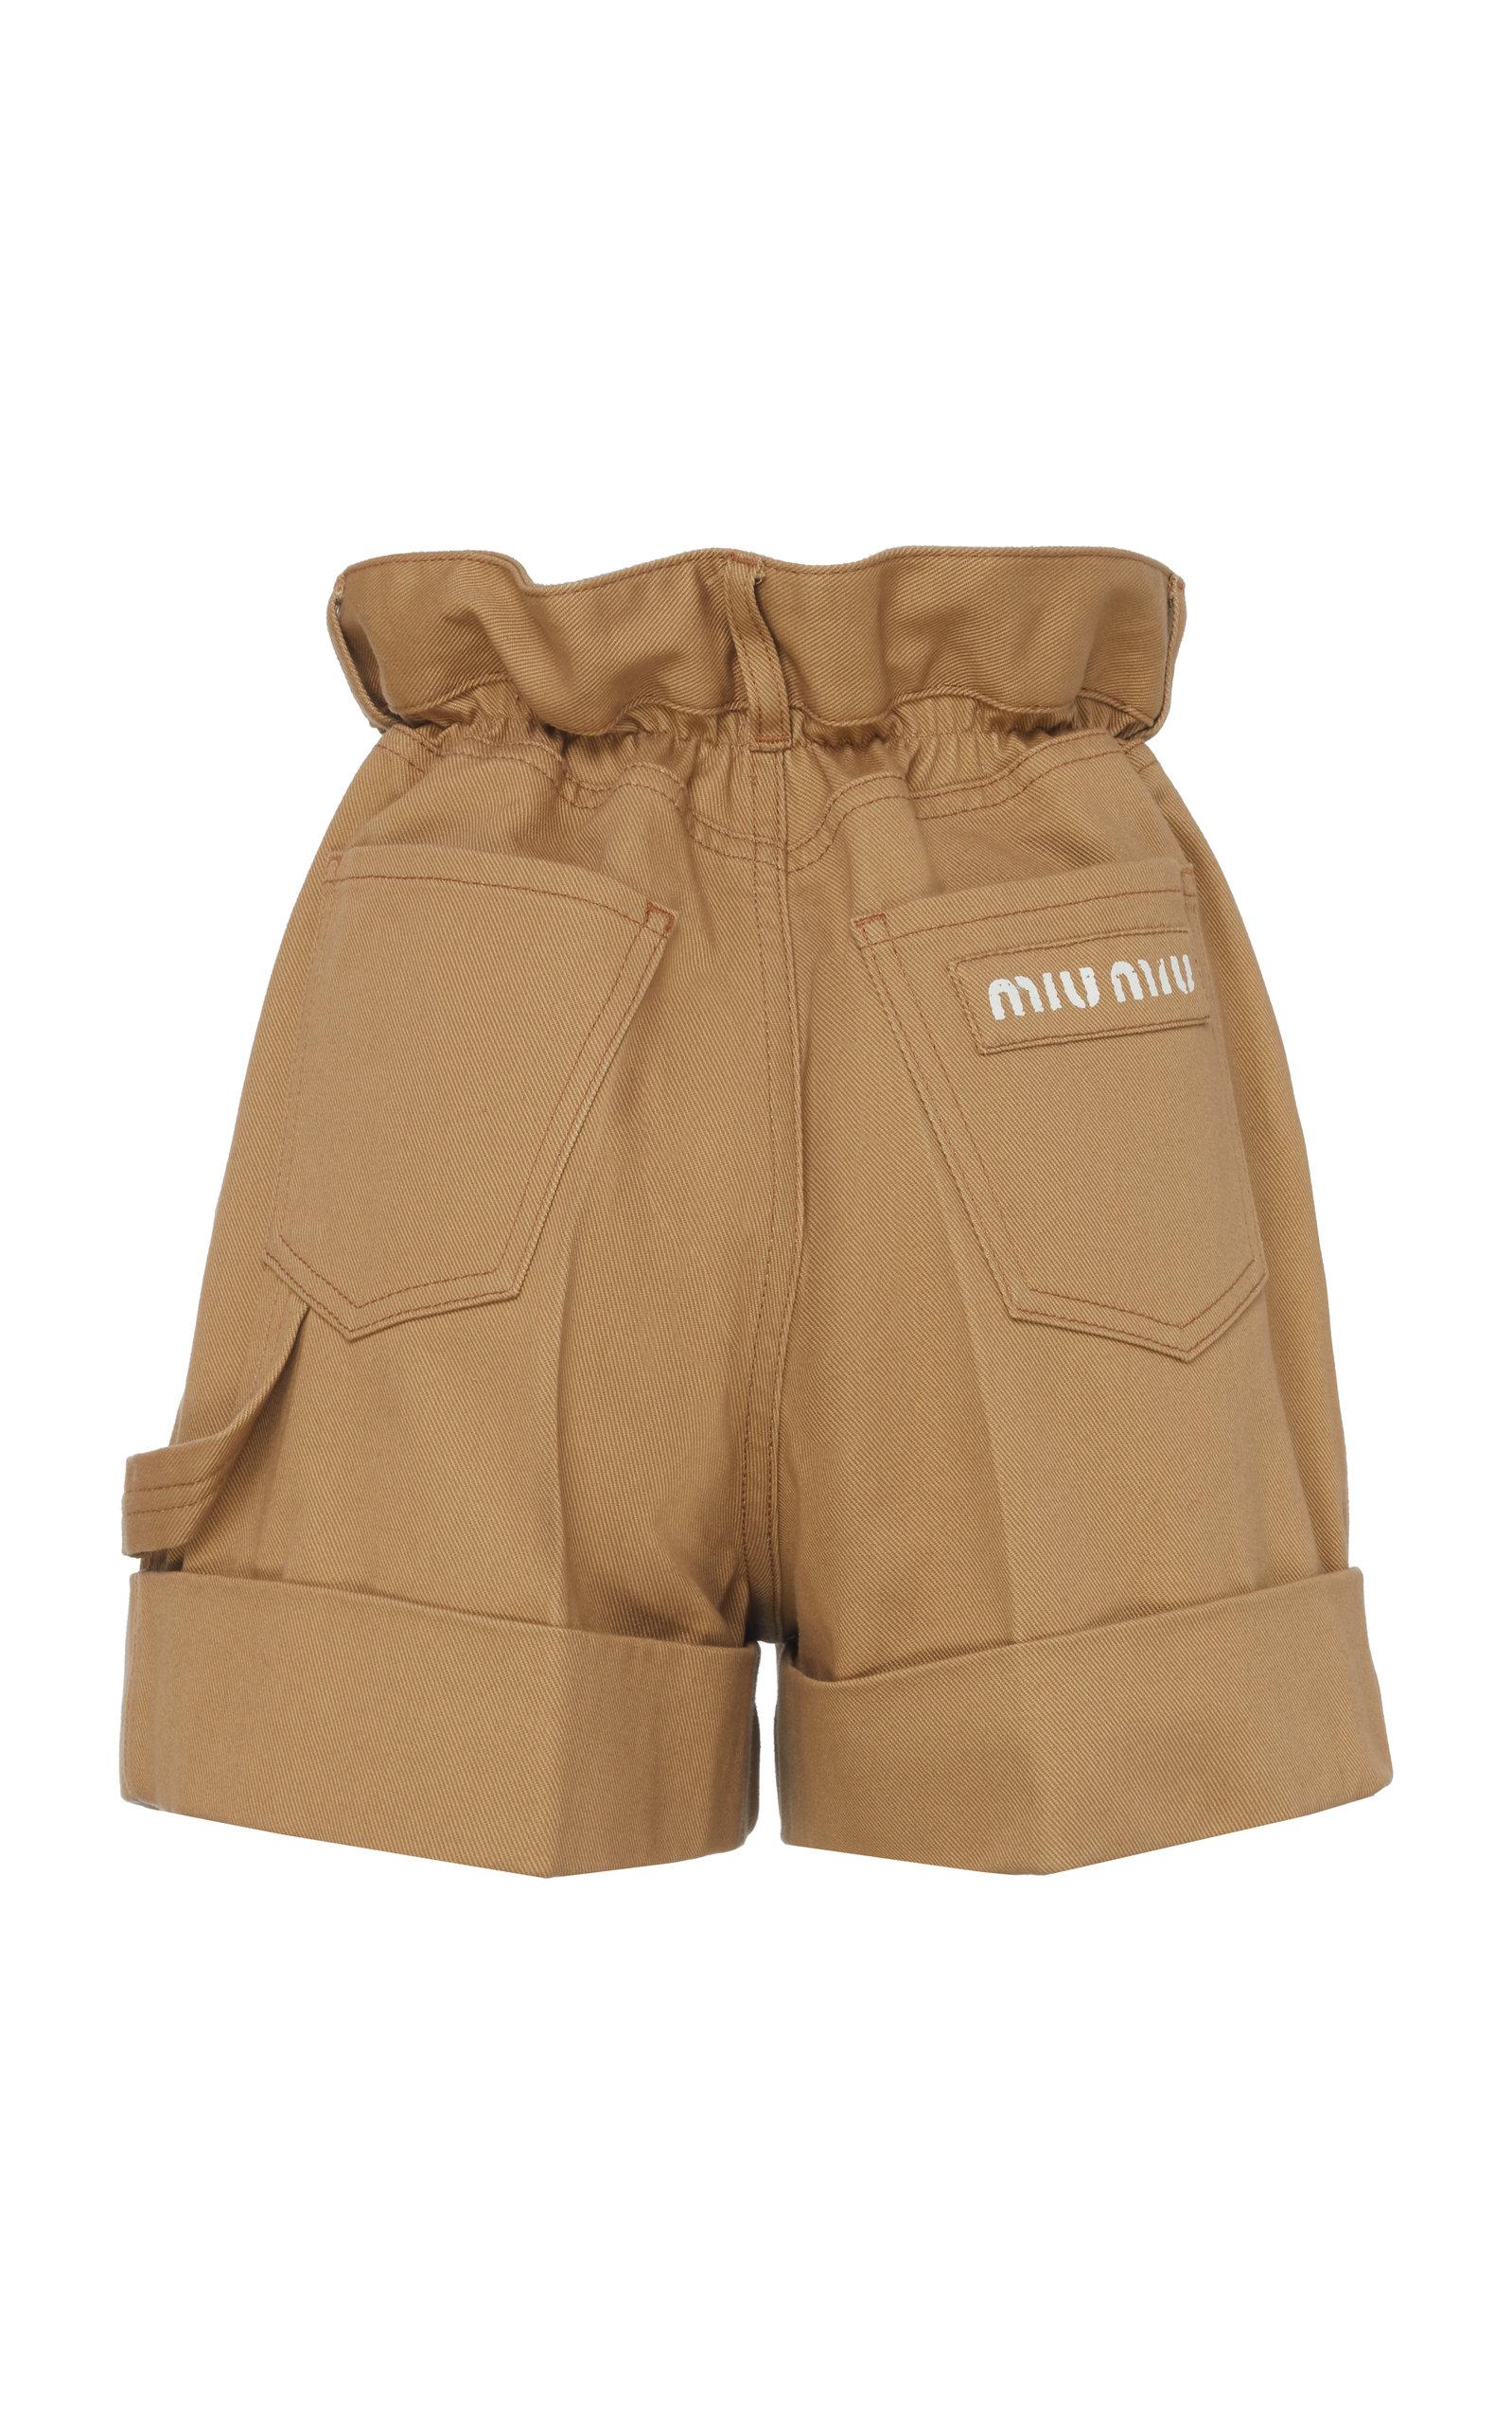 Miu Miu Cuffed Shorts | Lyst Australia